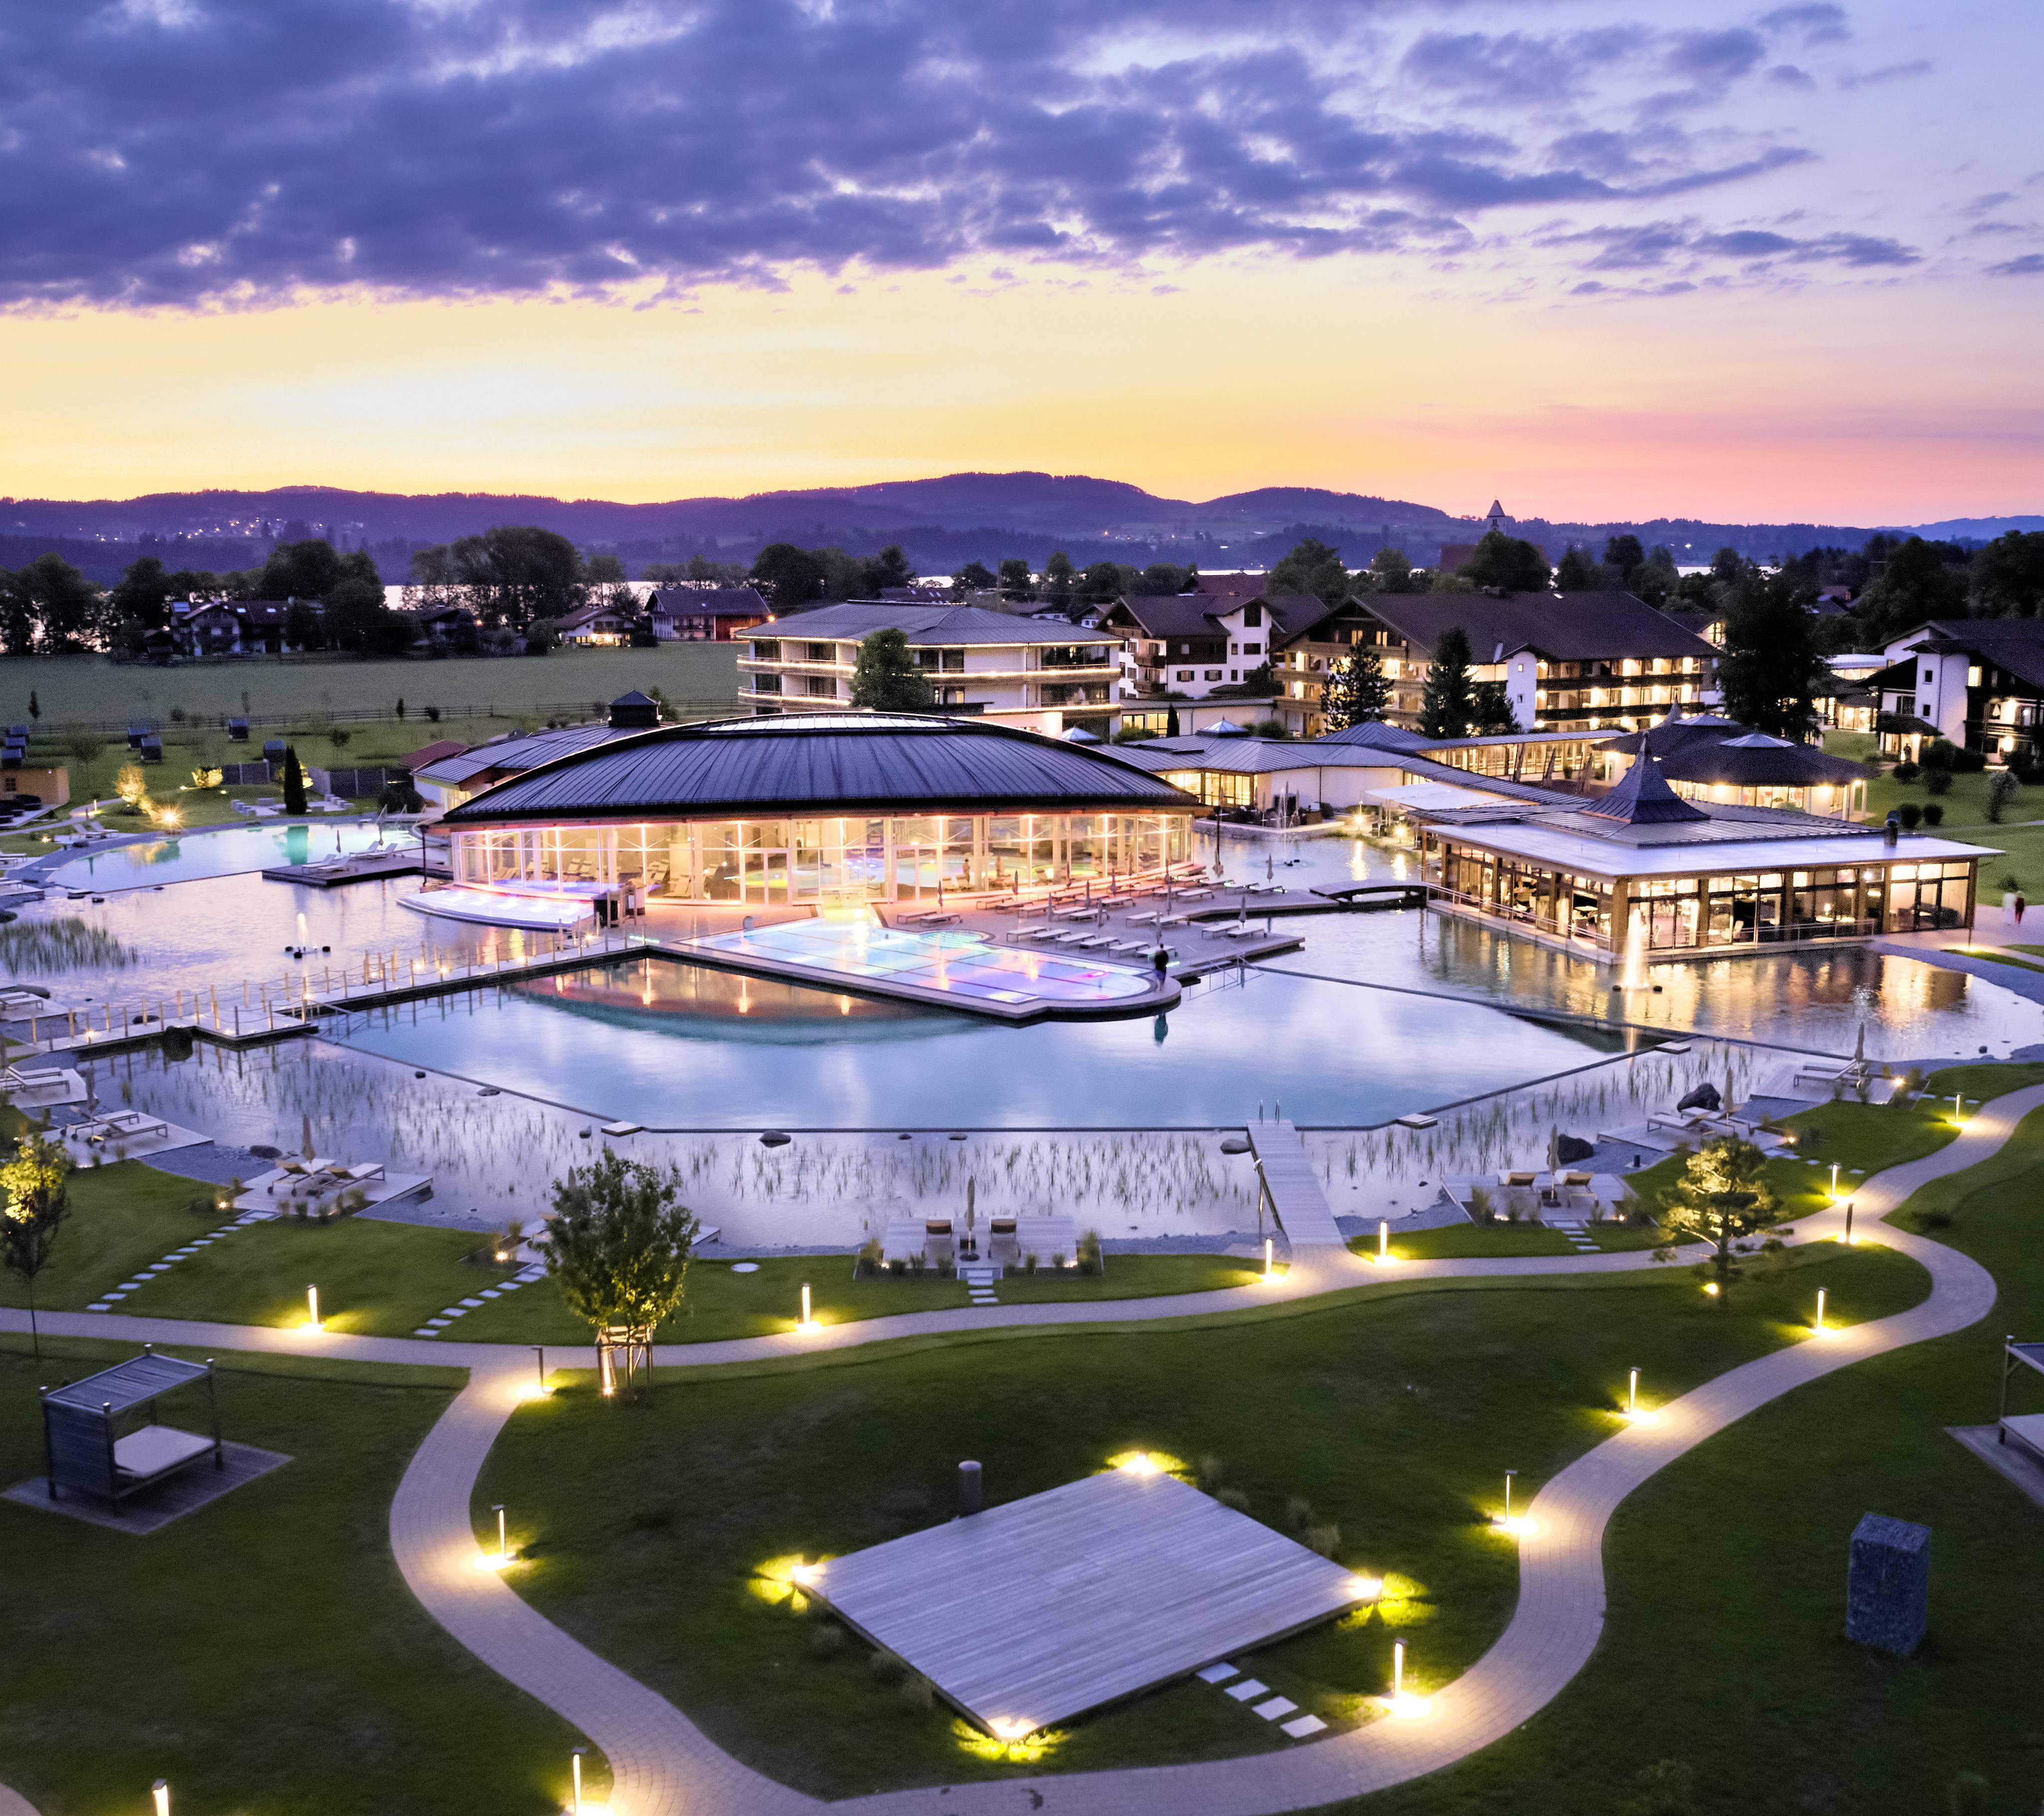 View of a luxury spa resort in the Allgäu in Bavaria